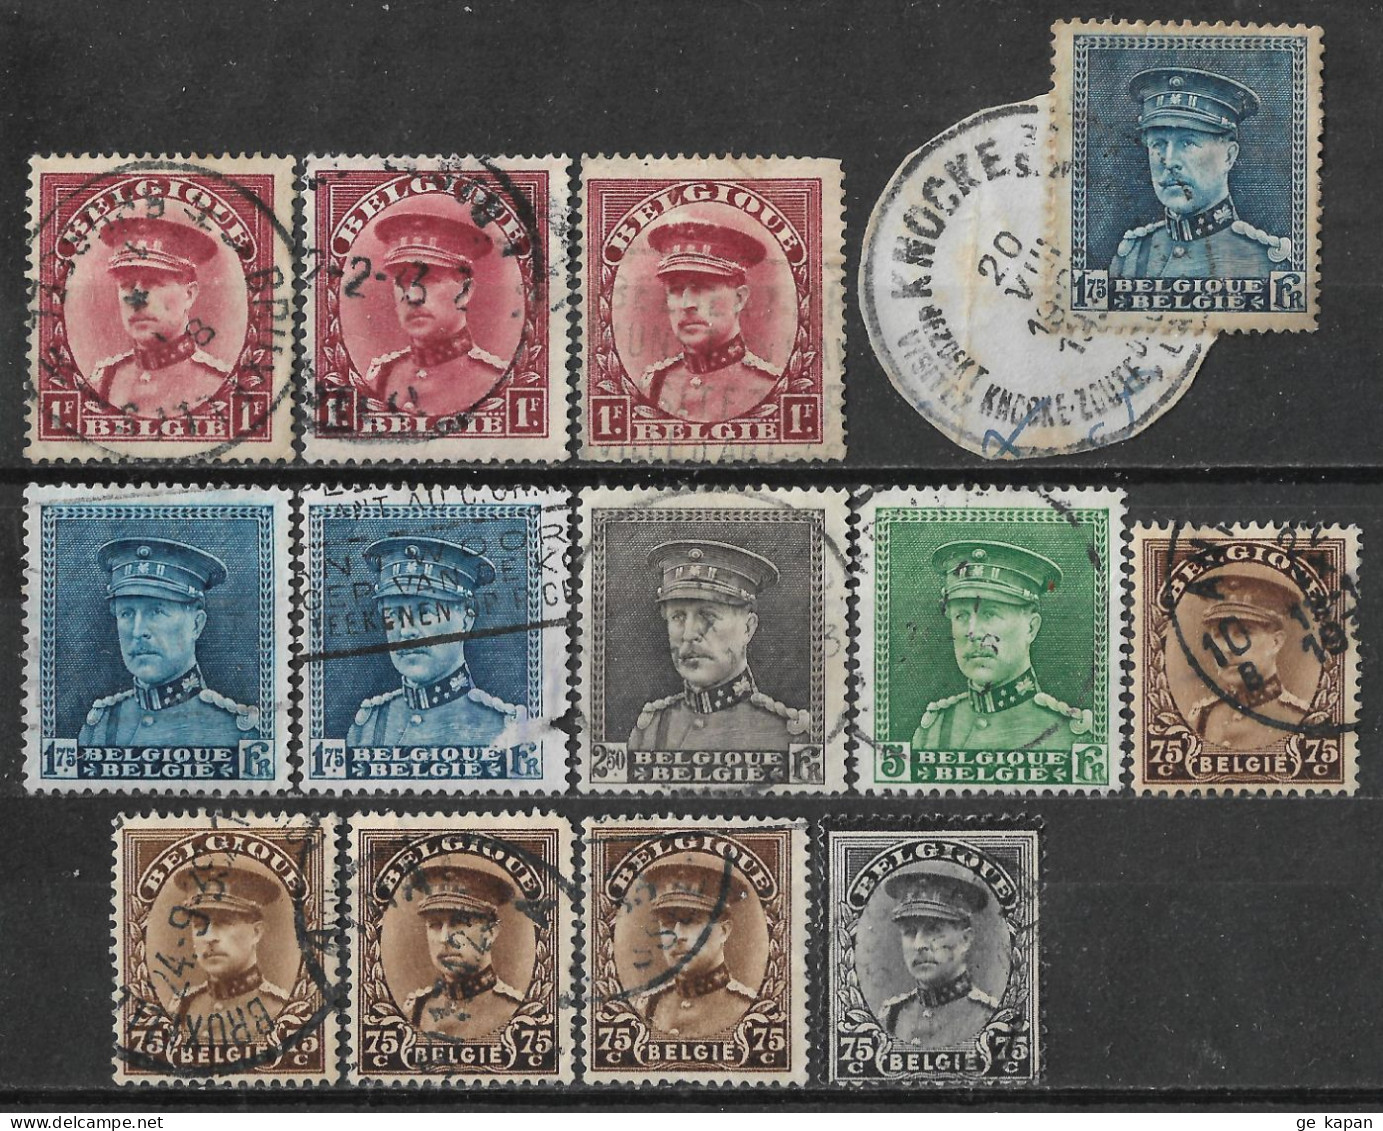 1931-1934 BELGIUM Set Of 13 USED STAMPS (Michel # 305,308,311,312,332,376b) CV €4.20 - 1931-1934 Mütze (Képi)